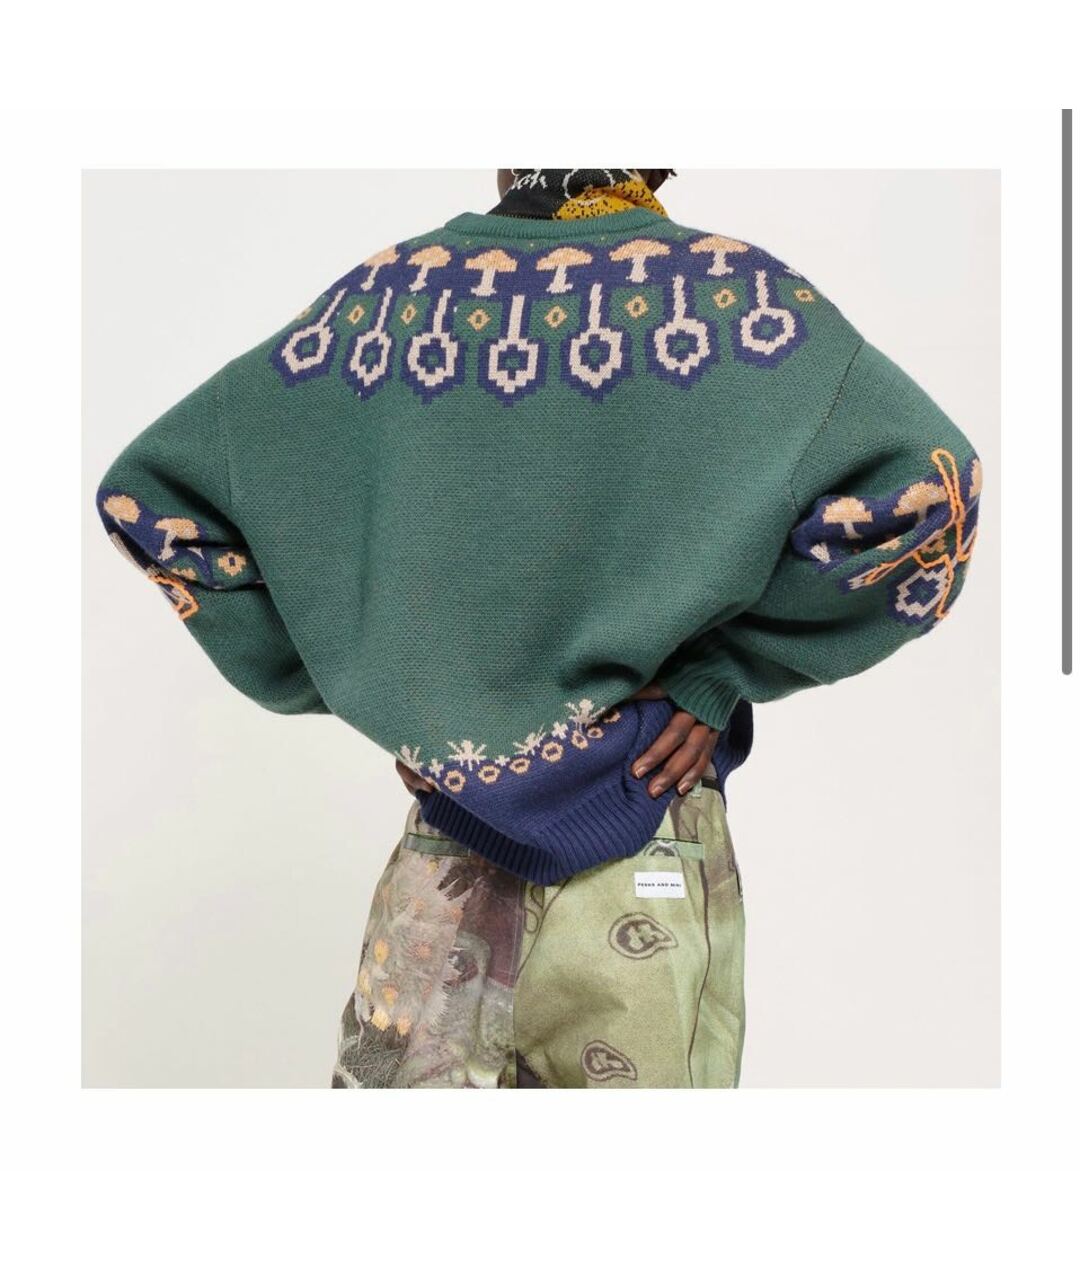 Perks and Mini Зеленый шерстяной джемпер / свитер, фото 5